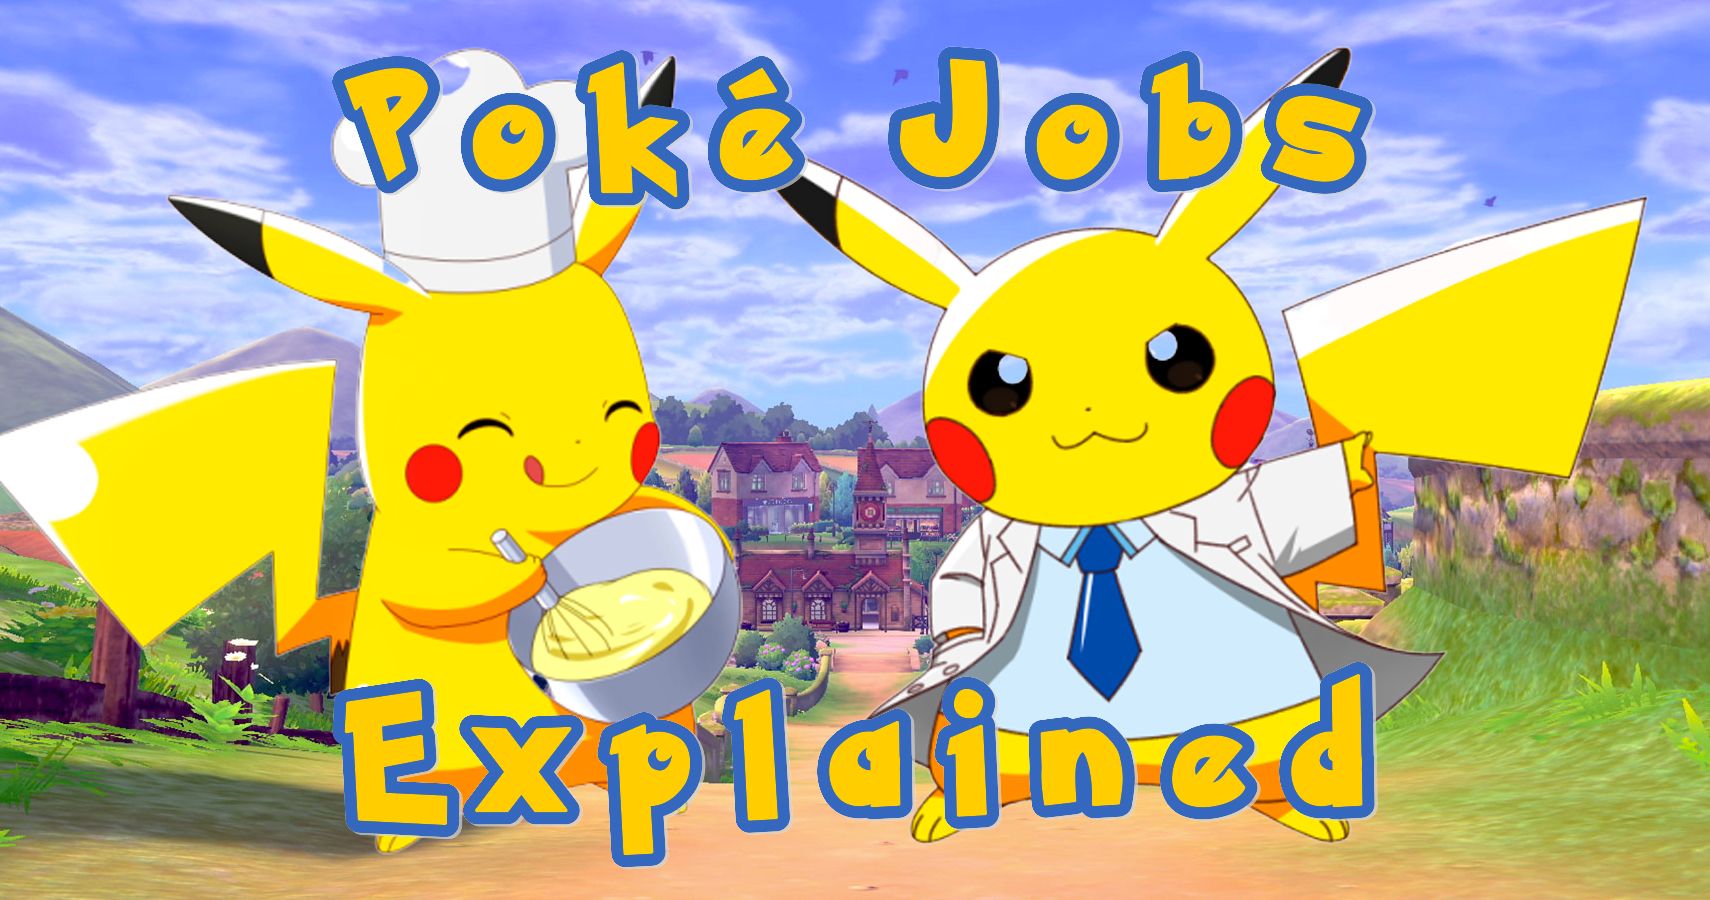 Pokémon Sword & Shield What Are Poké Jobs And How Do You Complete Them